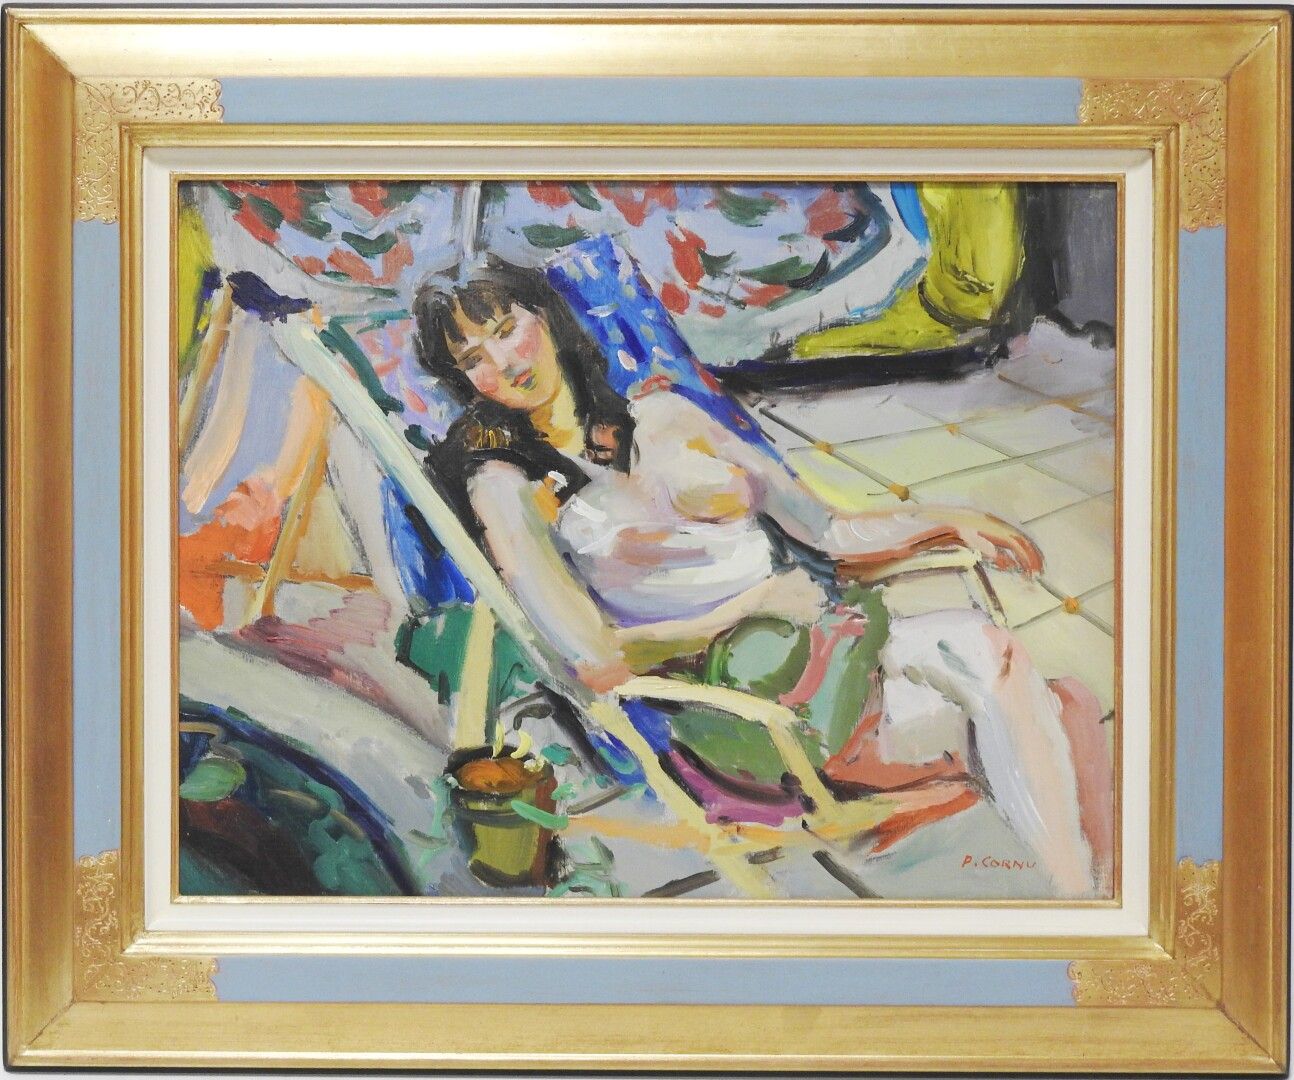 Null Pierre CORNU (1895 - 1996)

午睡的时候

布面油画，右下角有签名

50.5 x 65 cm